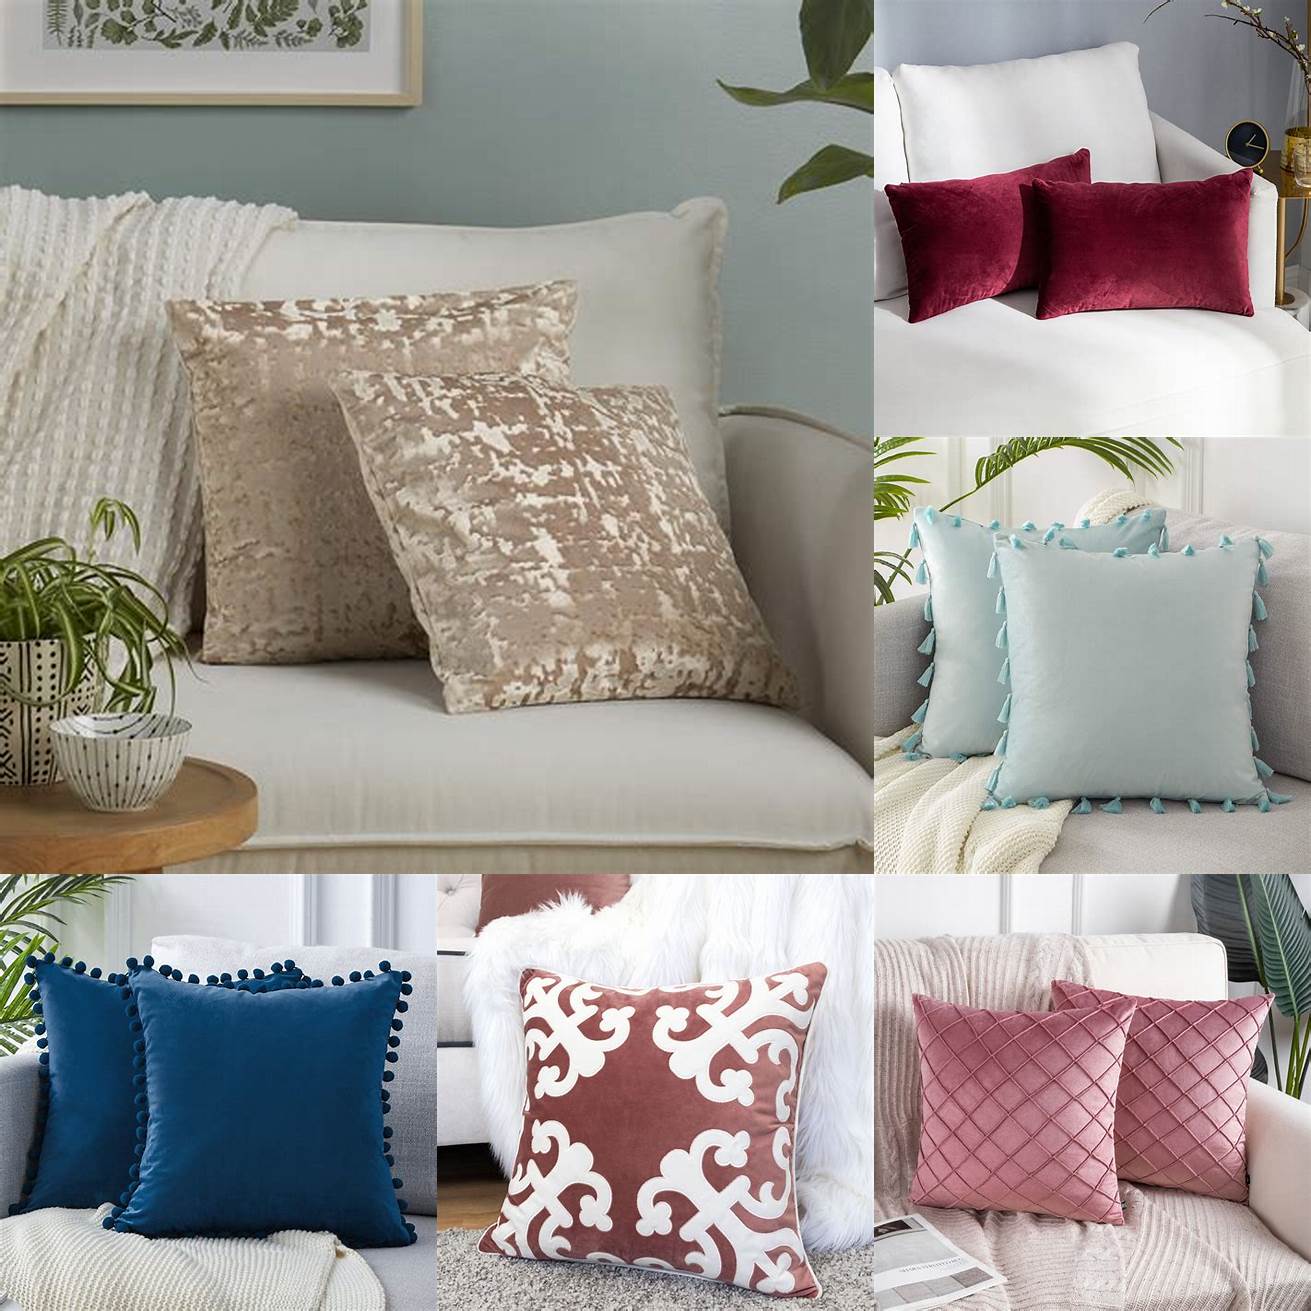 Velvet sofa with patterned pillows